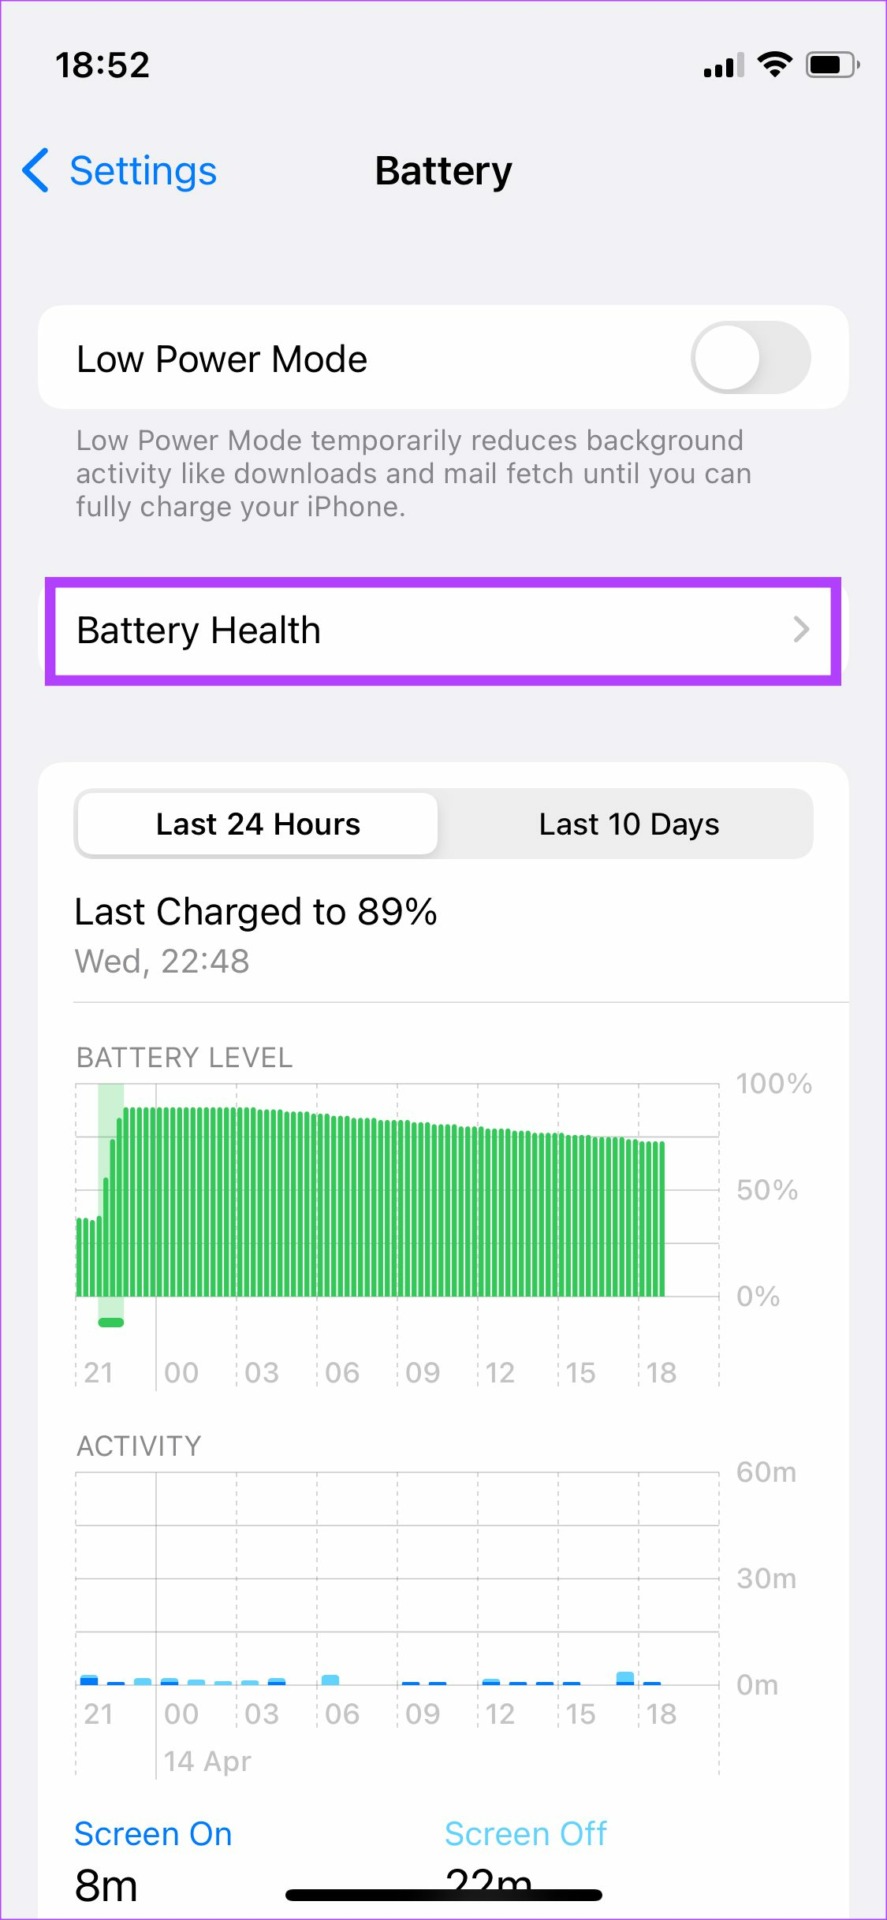 Battery health